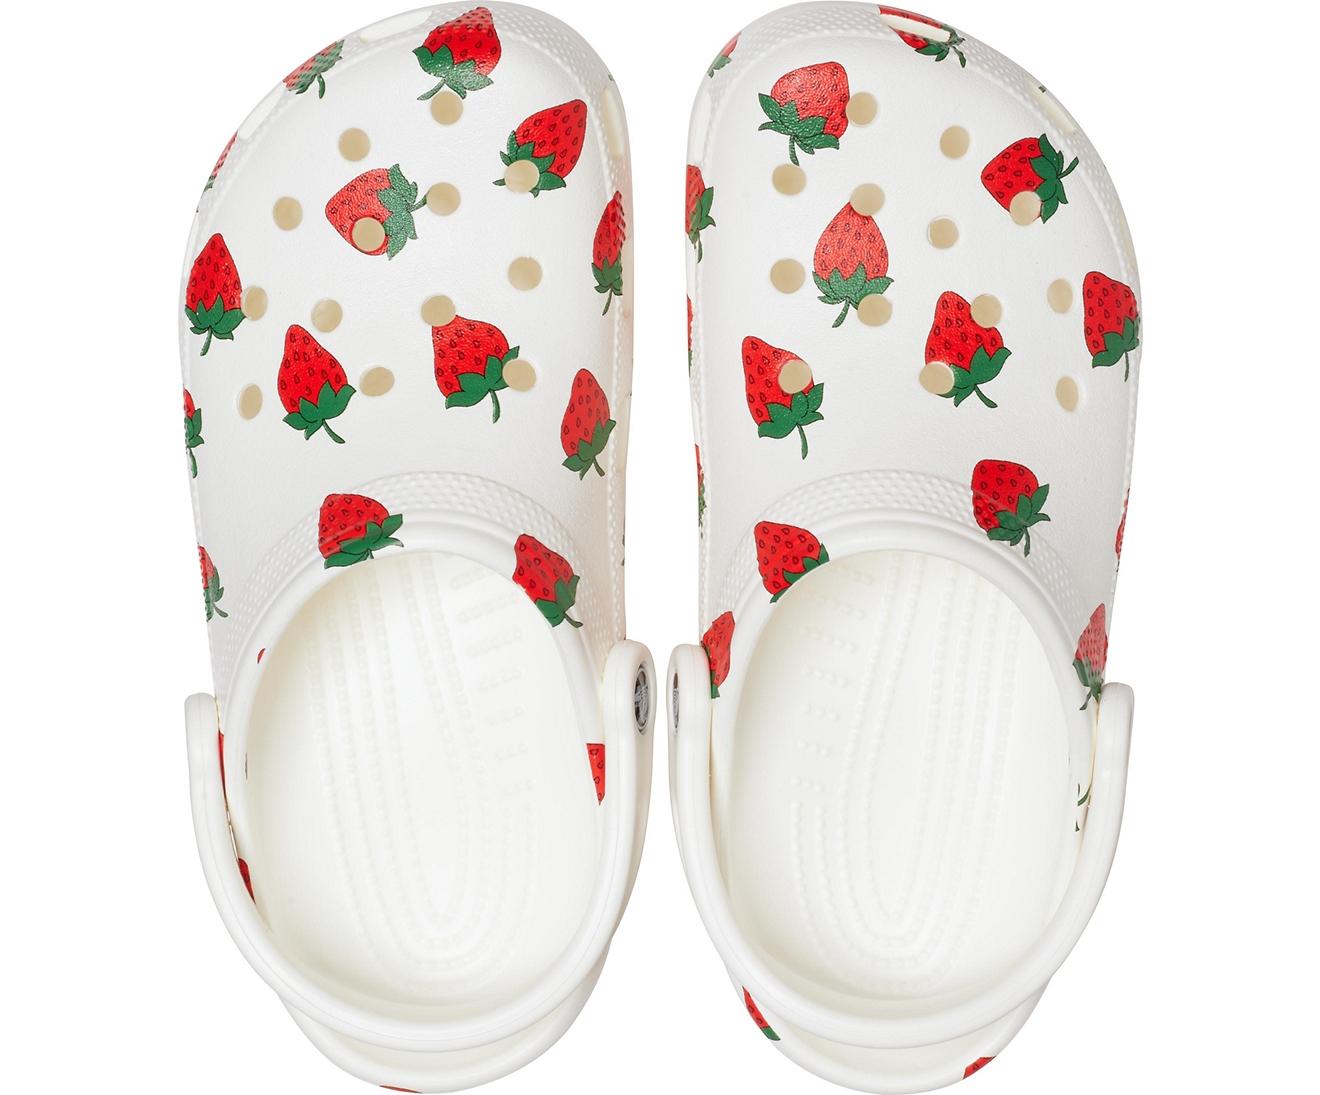 strawberry crocs zappos